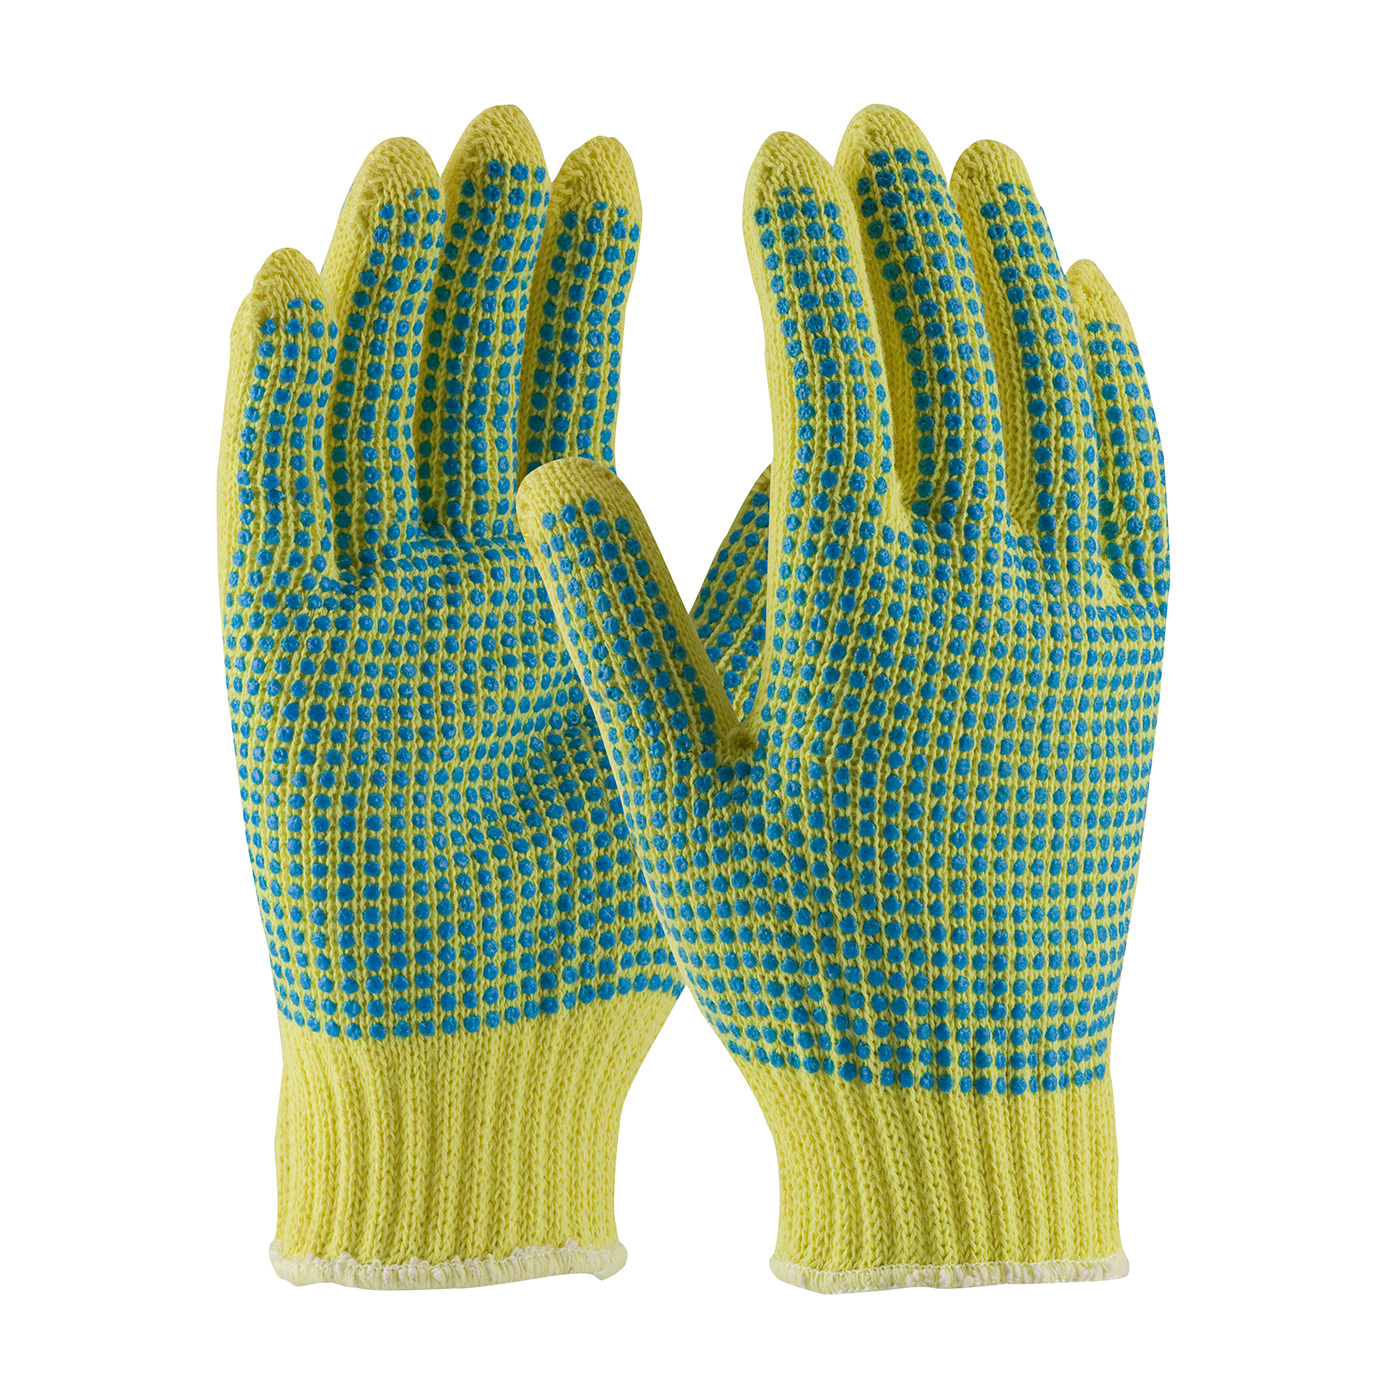 Kut Gard Seamless Knit Kevlar Glove with